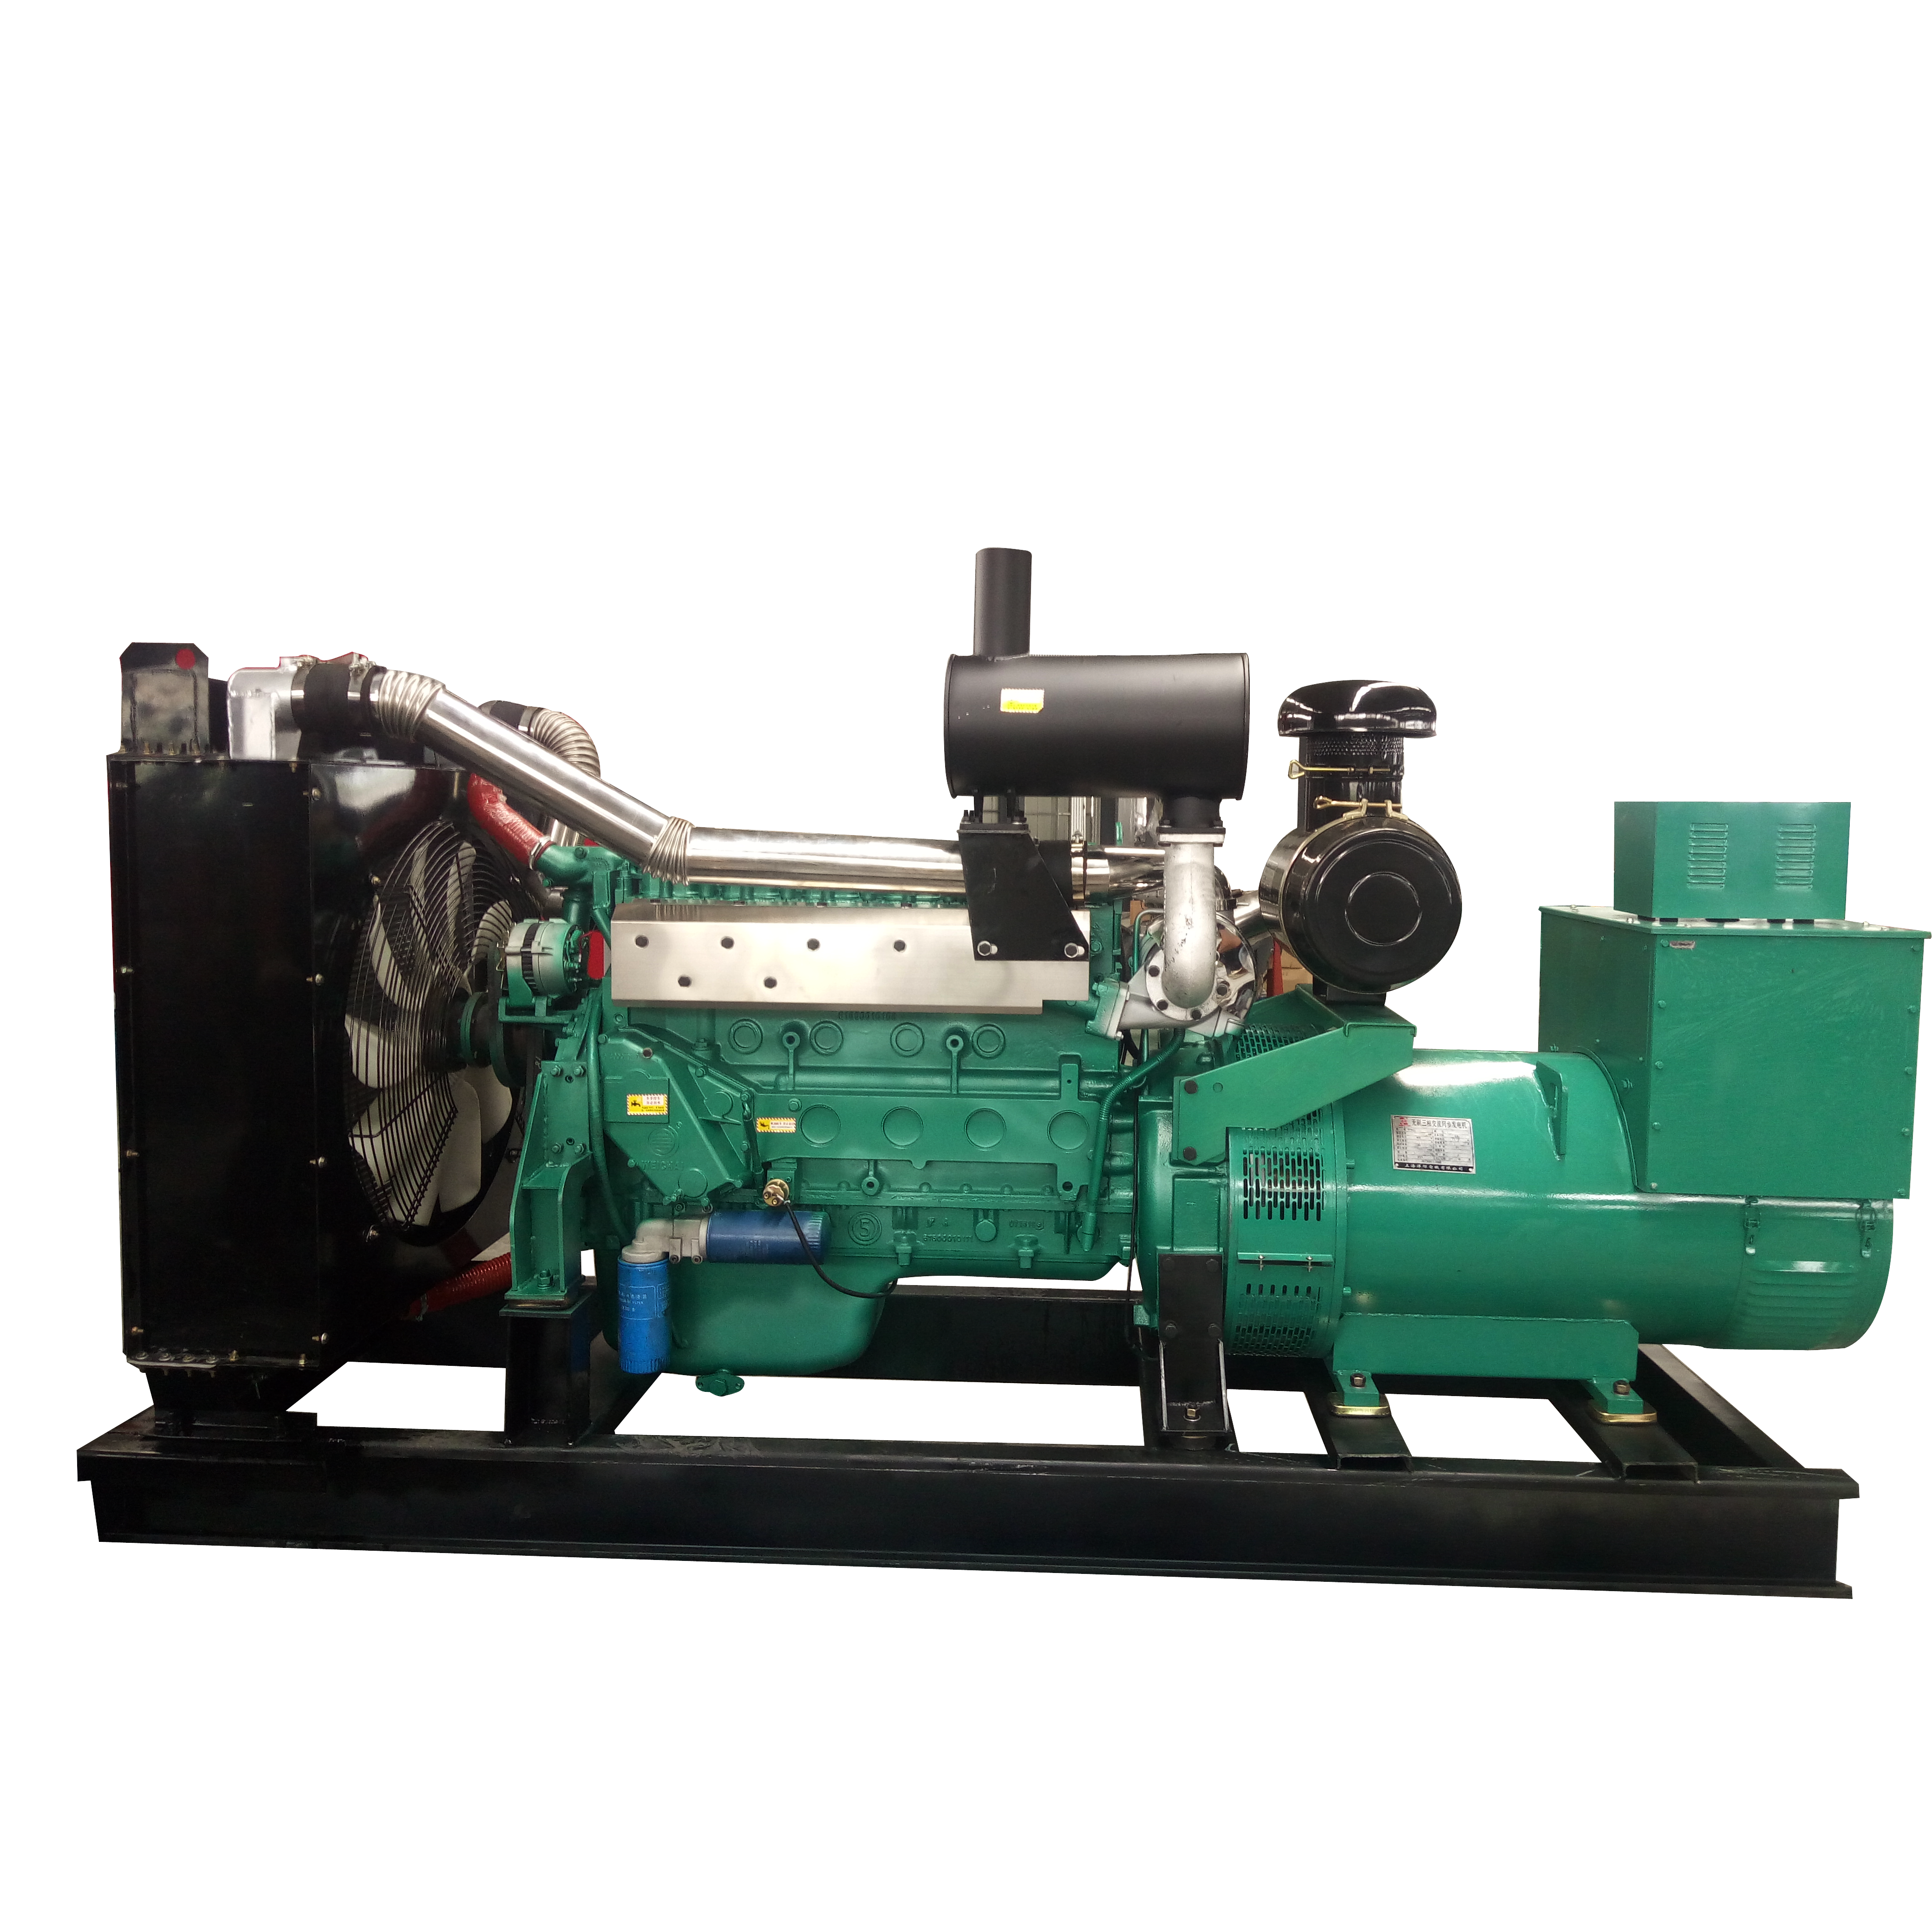 400kW Industrial Water-Cooled Diesel Generator - Factory Direct